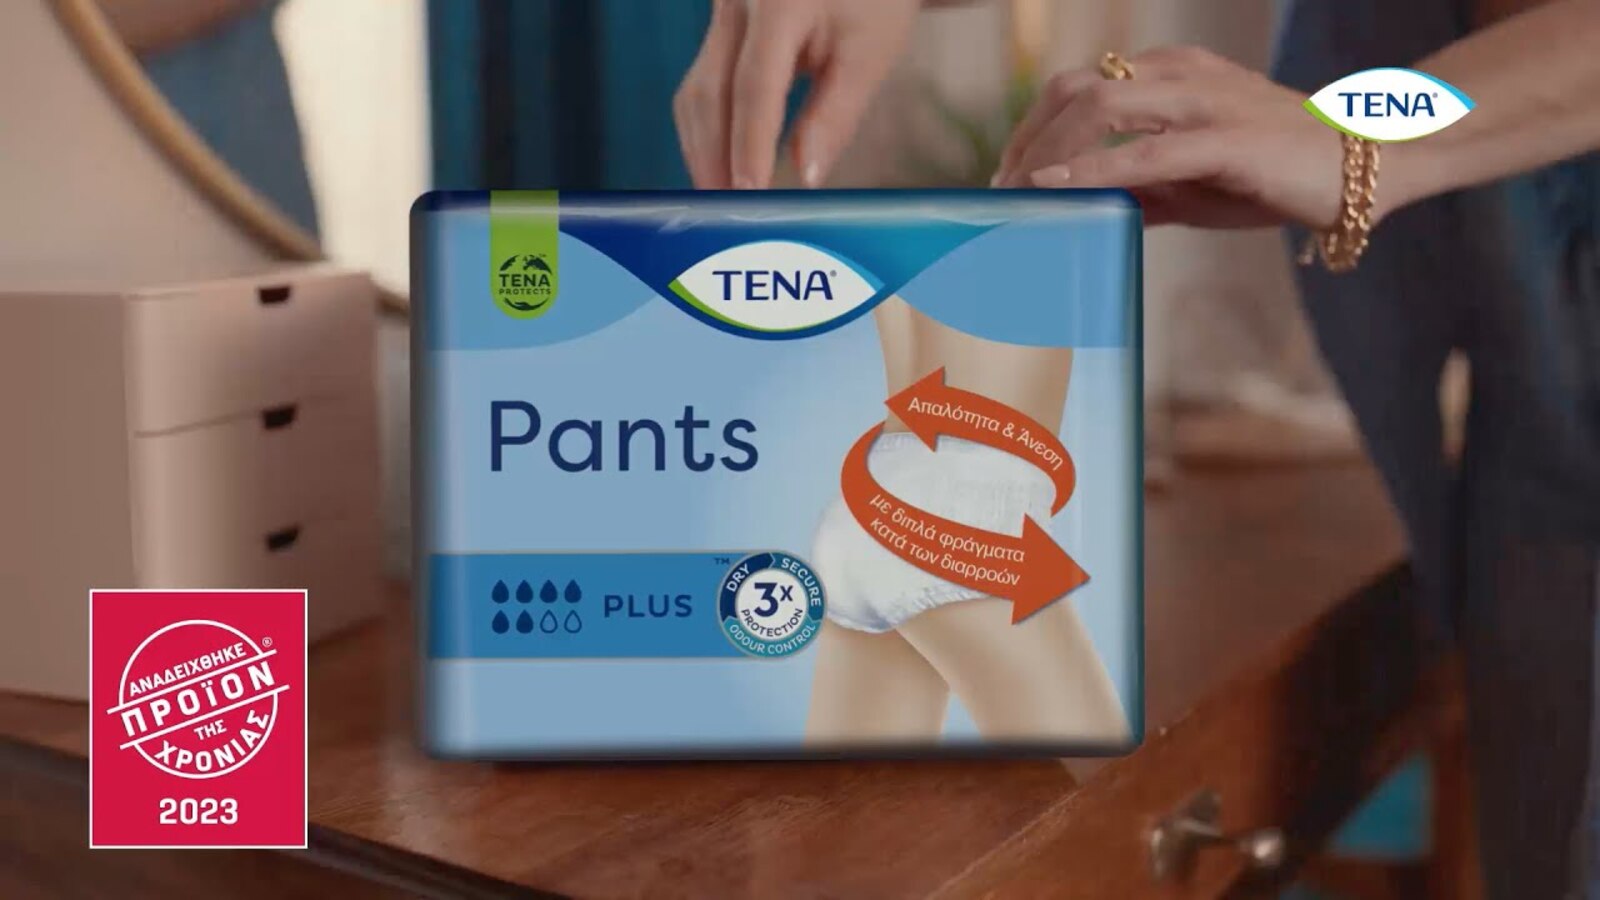 TENA Pants Plus. Η νέα του εικόνα ήρθε να ενισχύσει όλα τα πλεονεκτήματα που έχει αυτό το προϊόν.